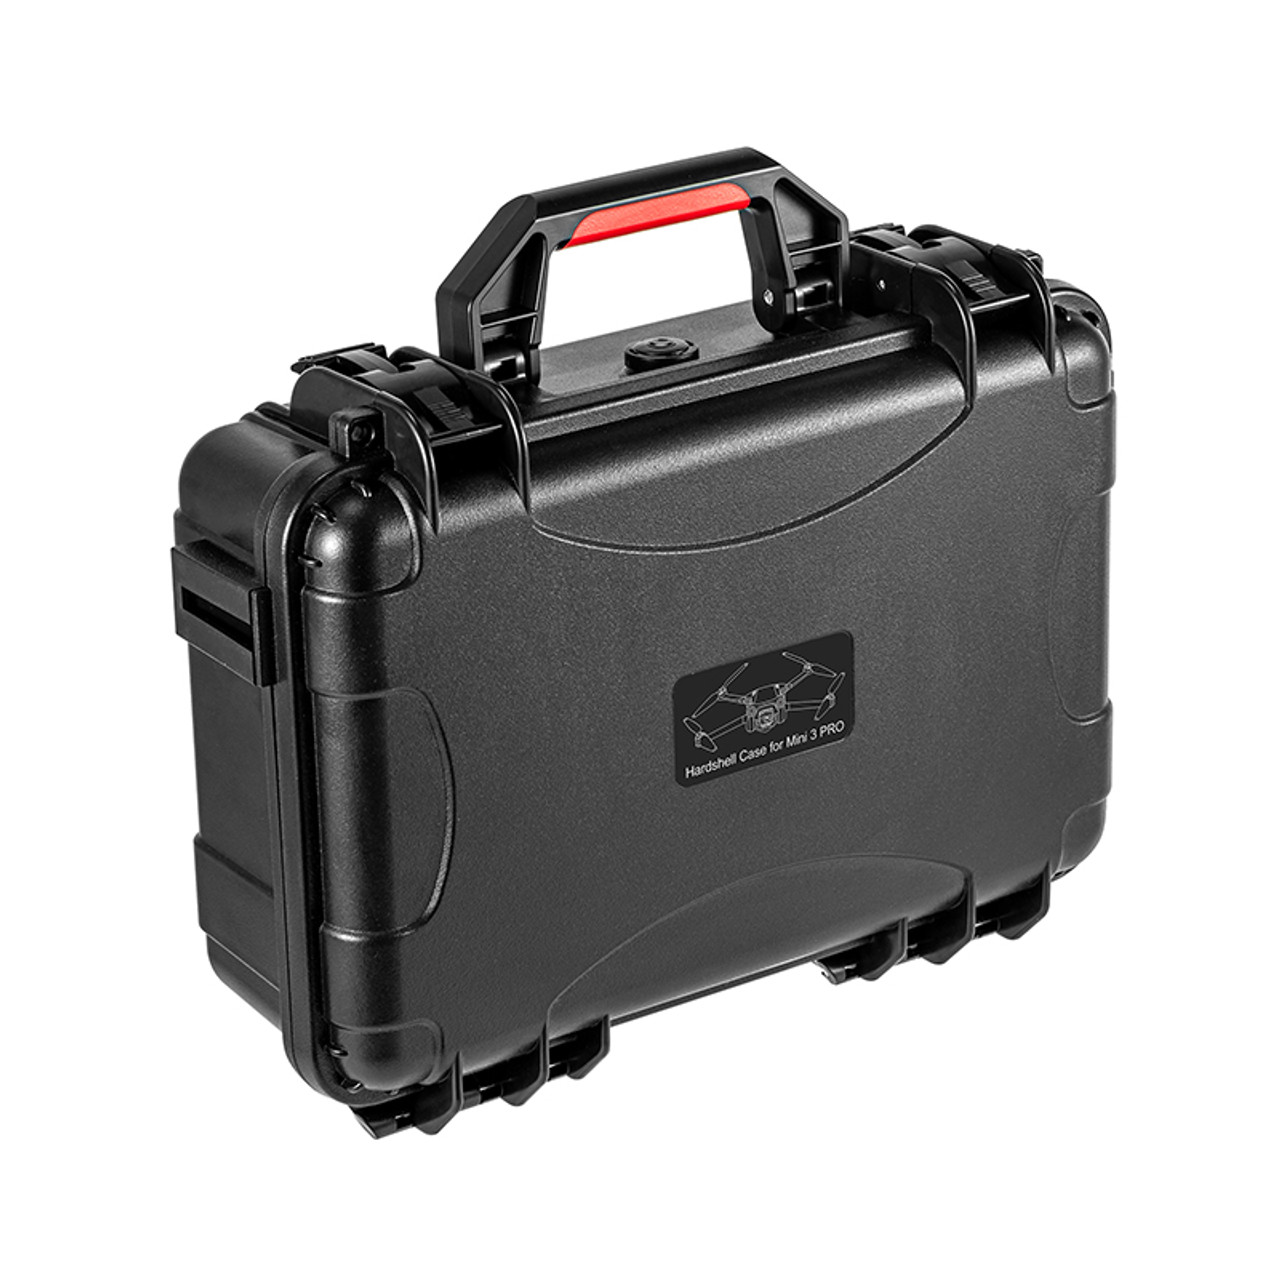  STARTRC Mini 3 Pro Carrying Case, Portable Travel Bag